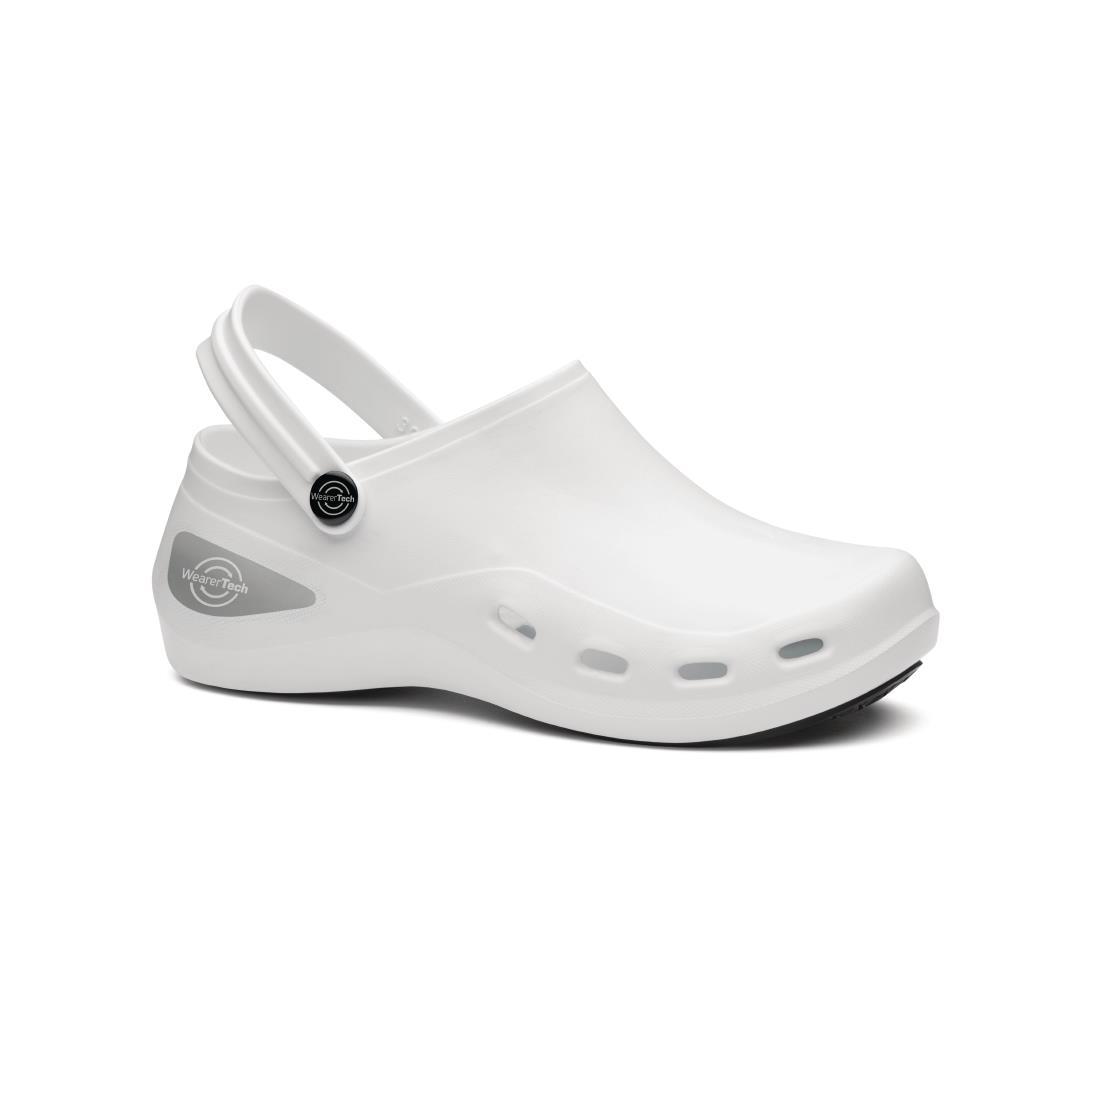 WearerTech Unisex Invigorate White Safety Shoe Size 9 - BB199-43  - 2